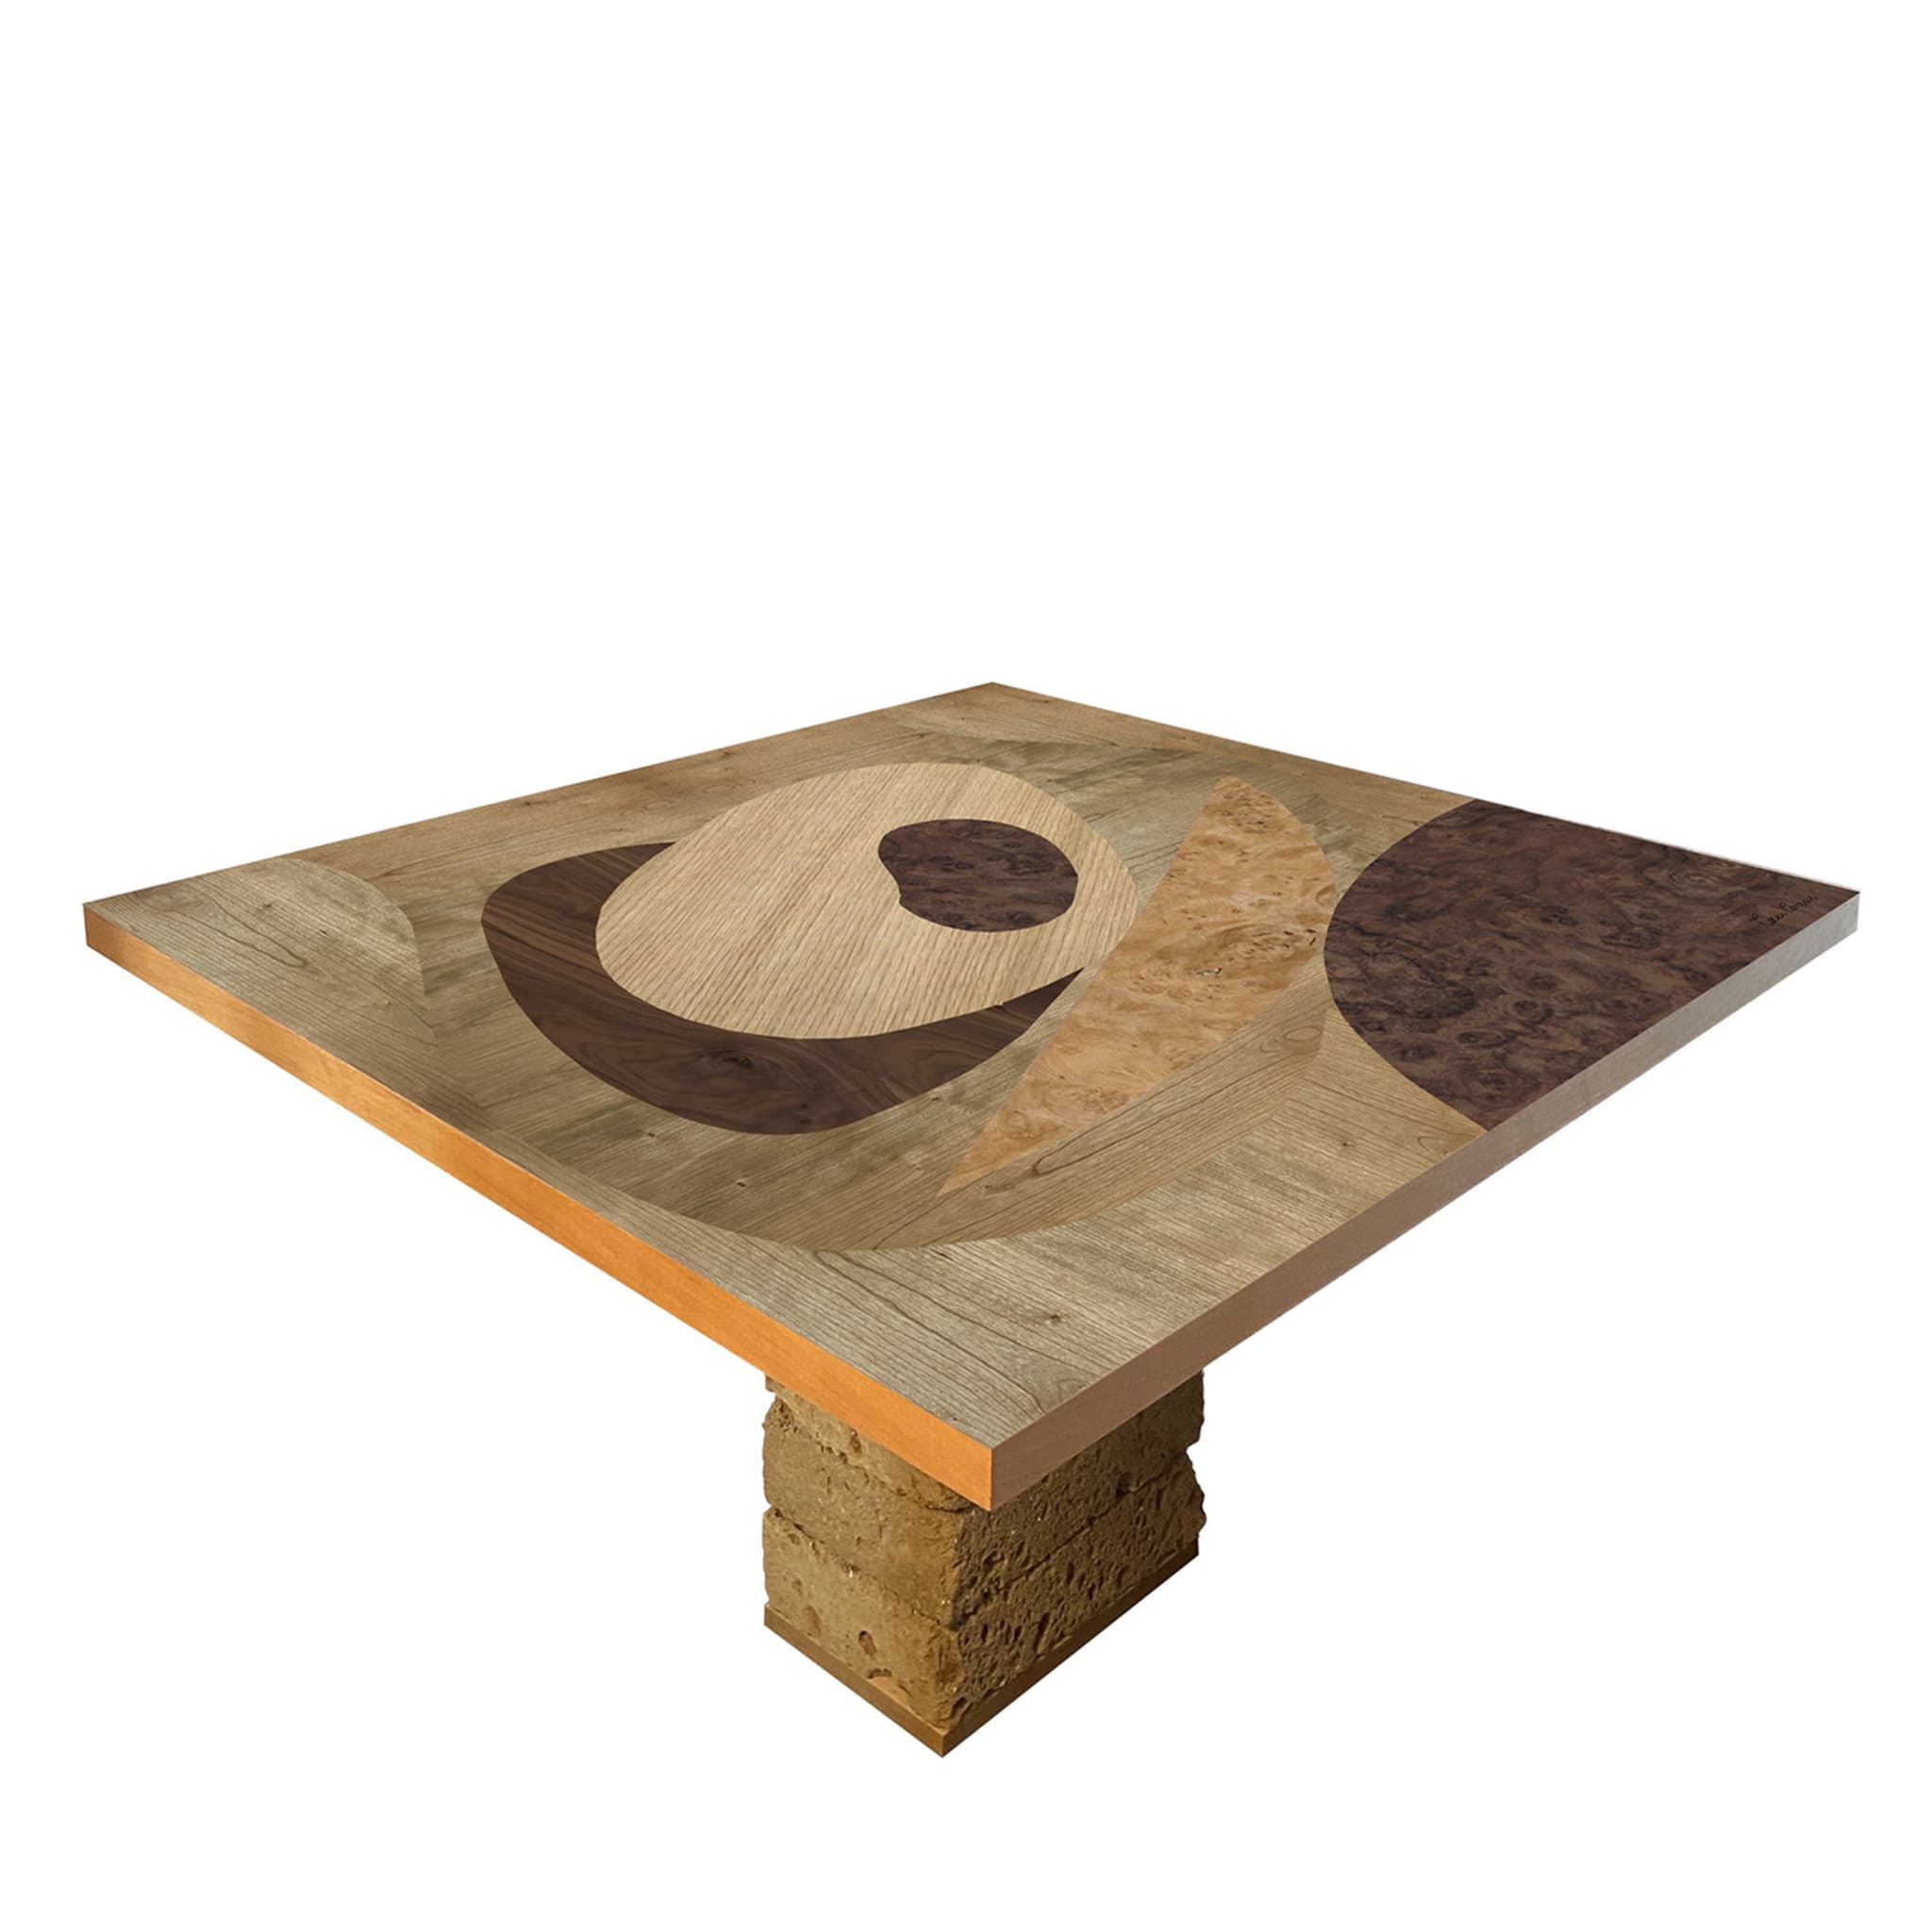 Tarsia Tables Tt3 Square Polychrome Table by Mascia Meccani - Alternative view 3